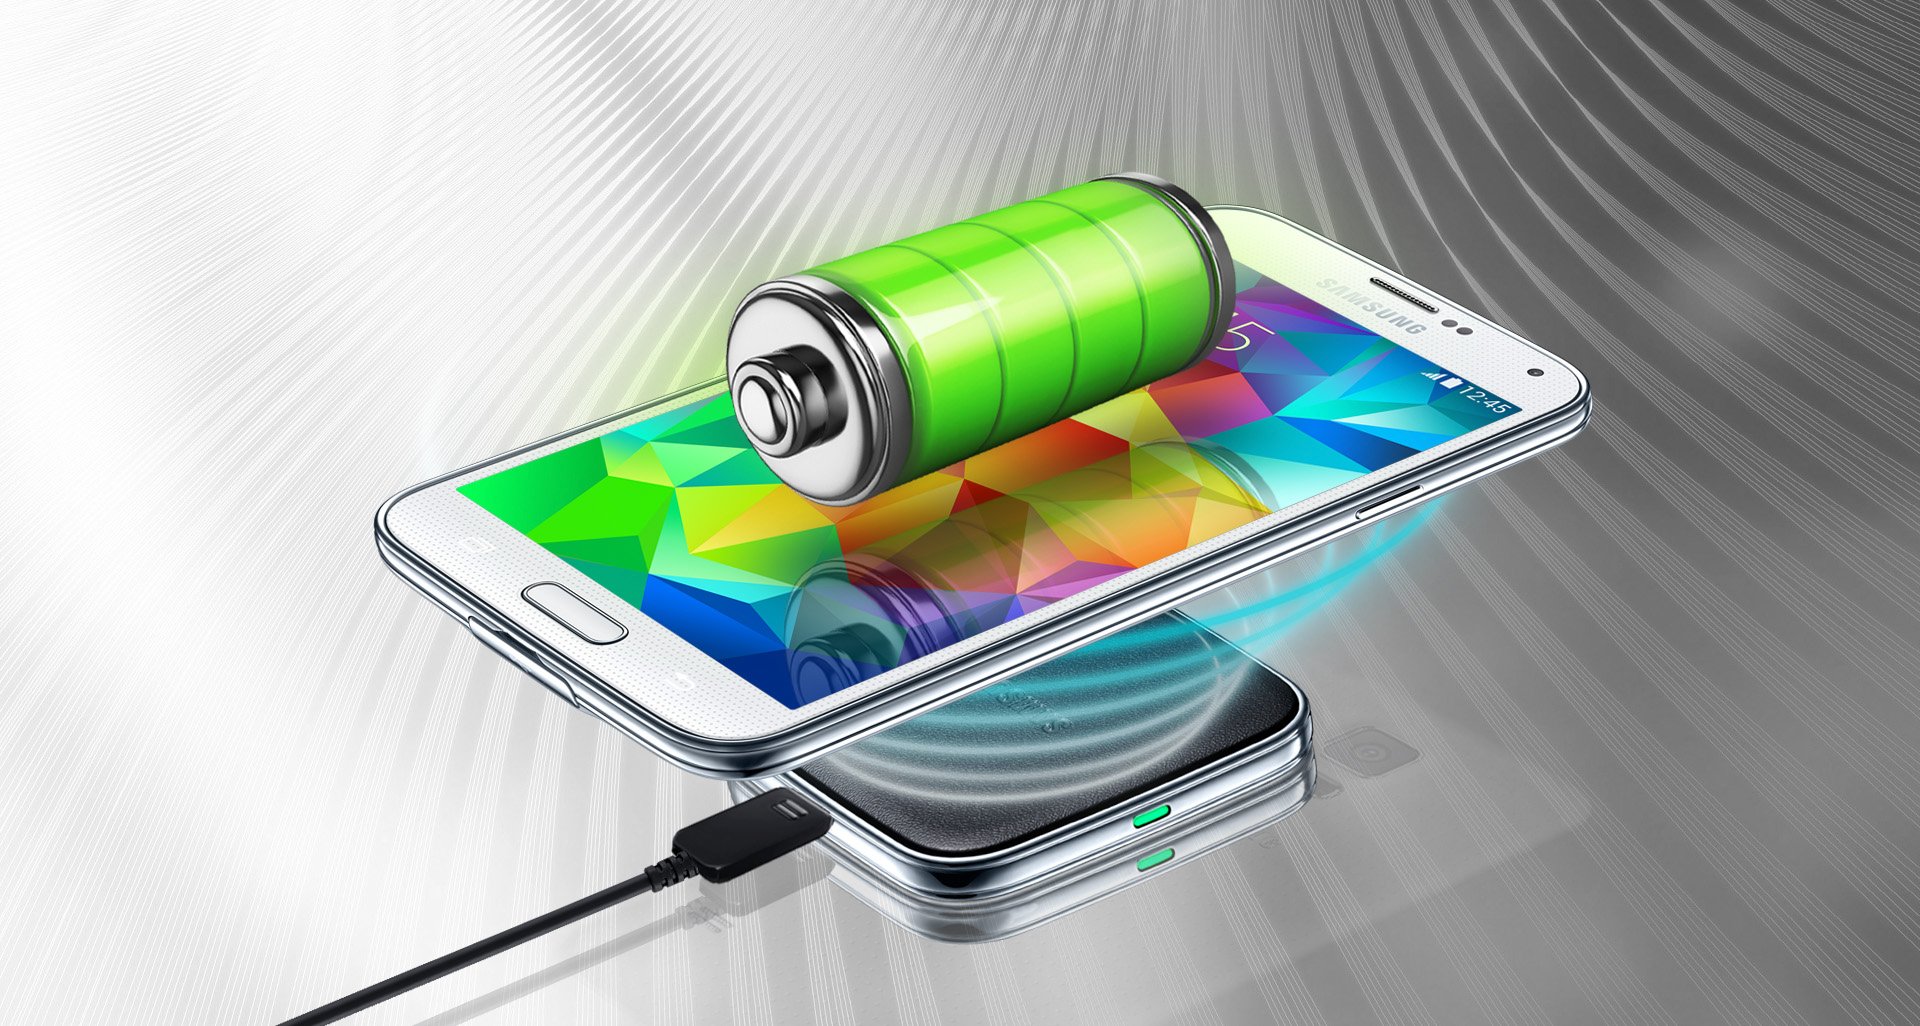 Зарядка Аккумулятора Телефона Samsung